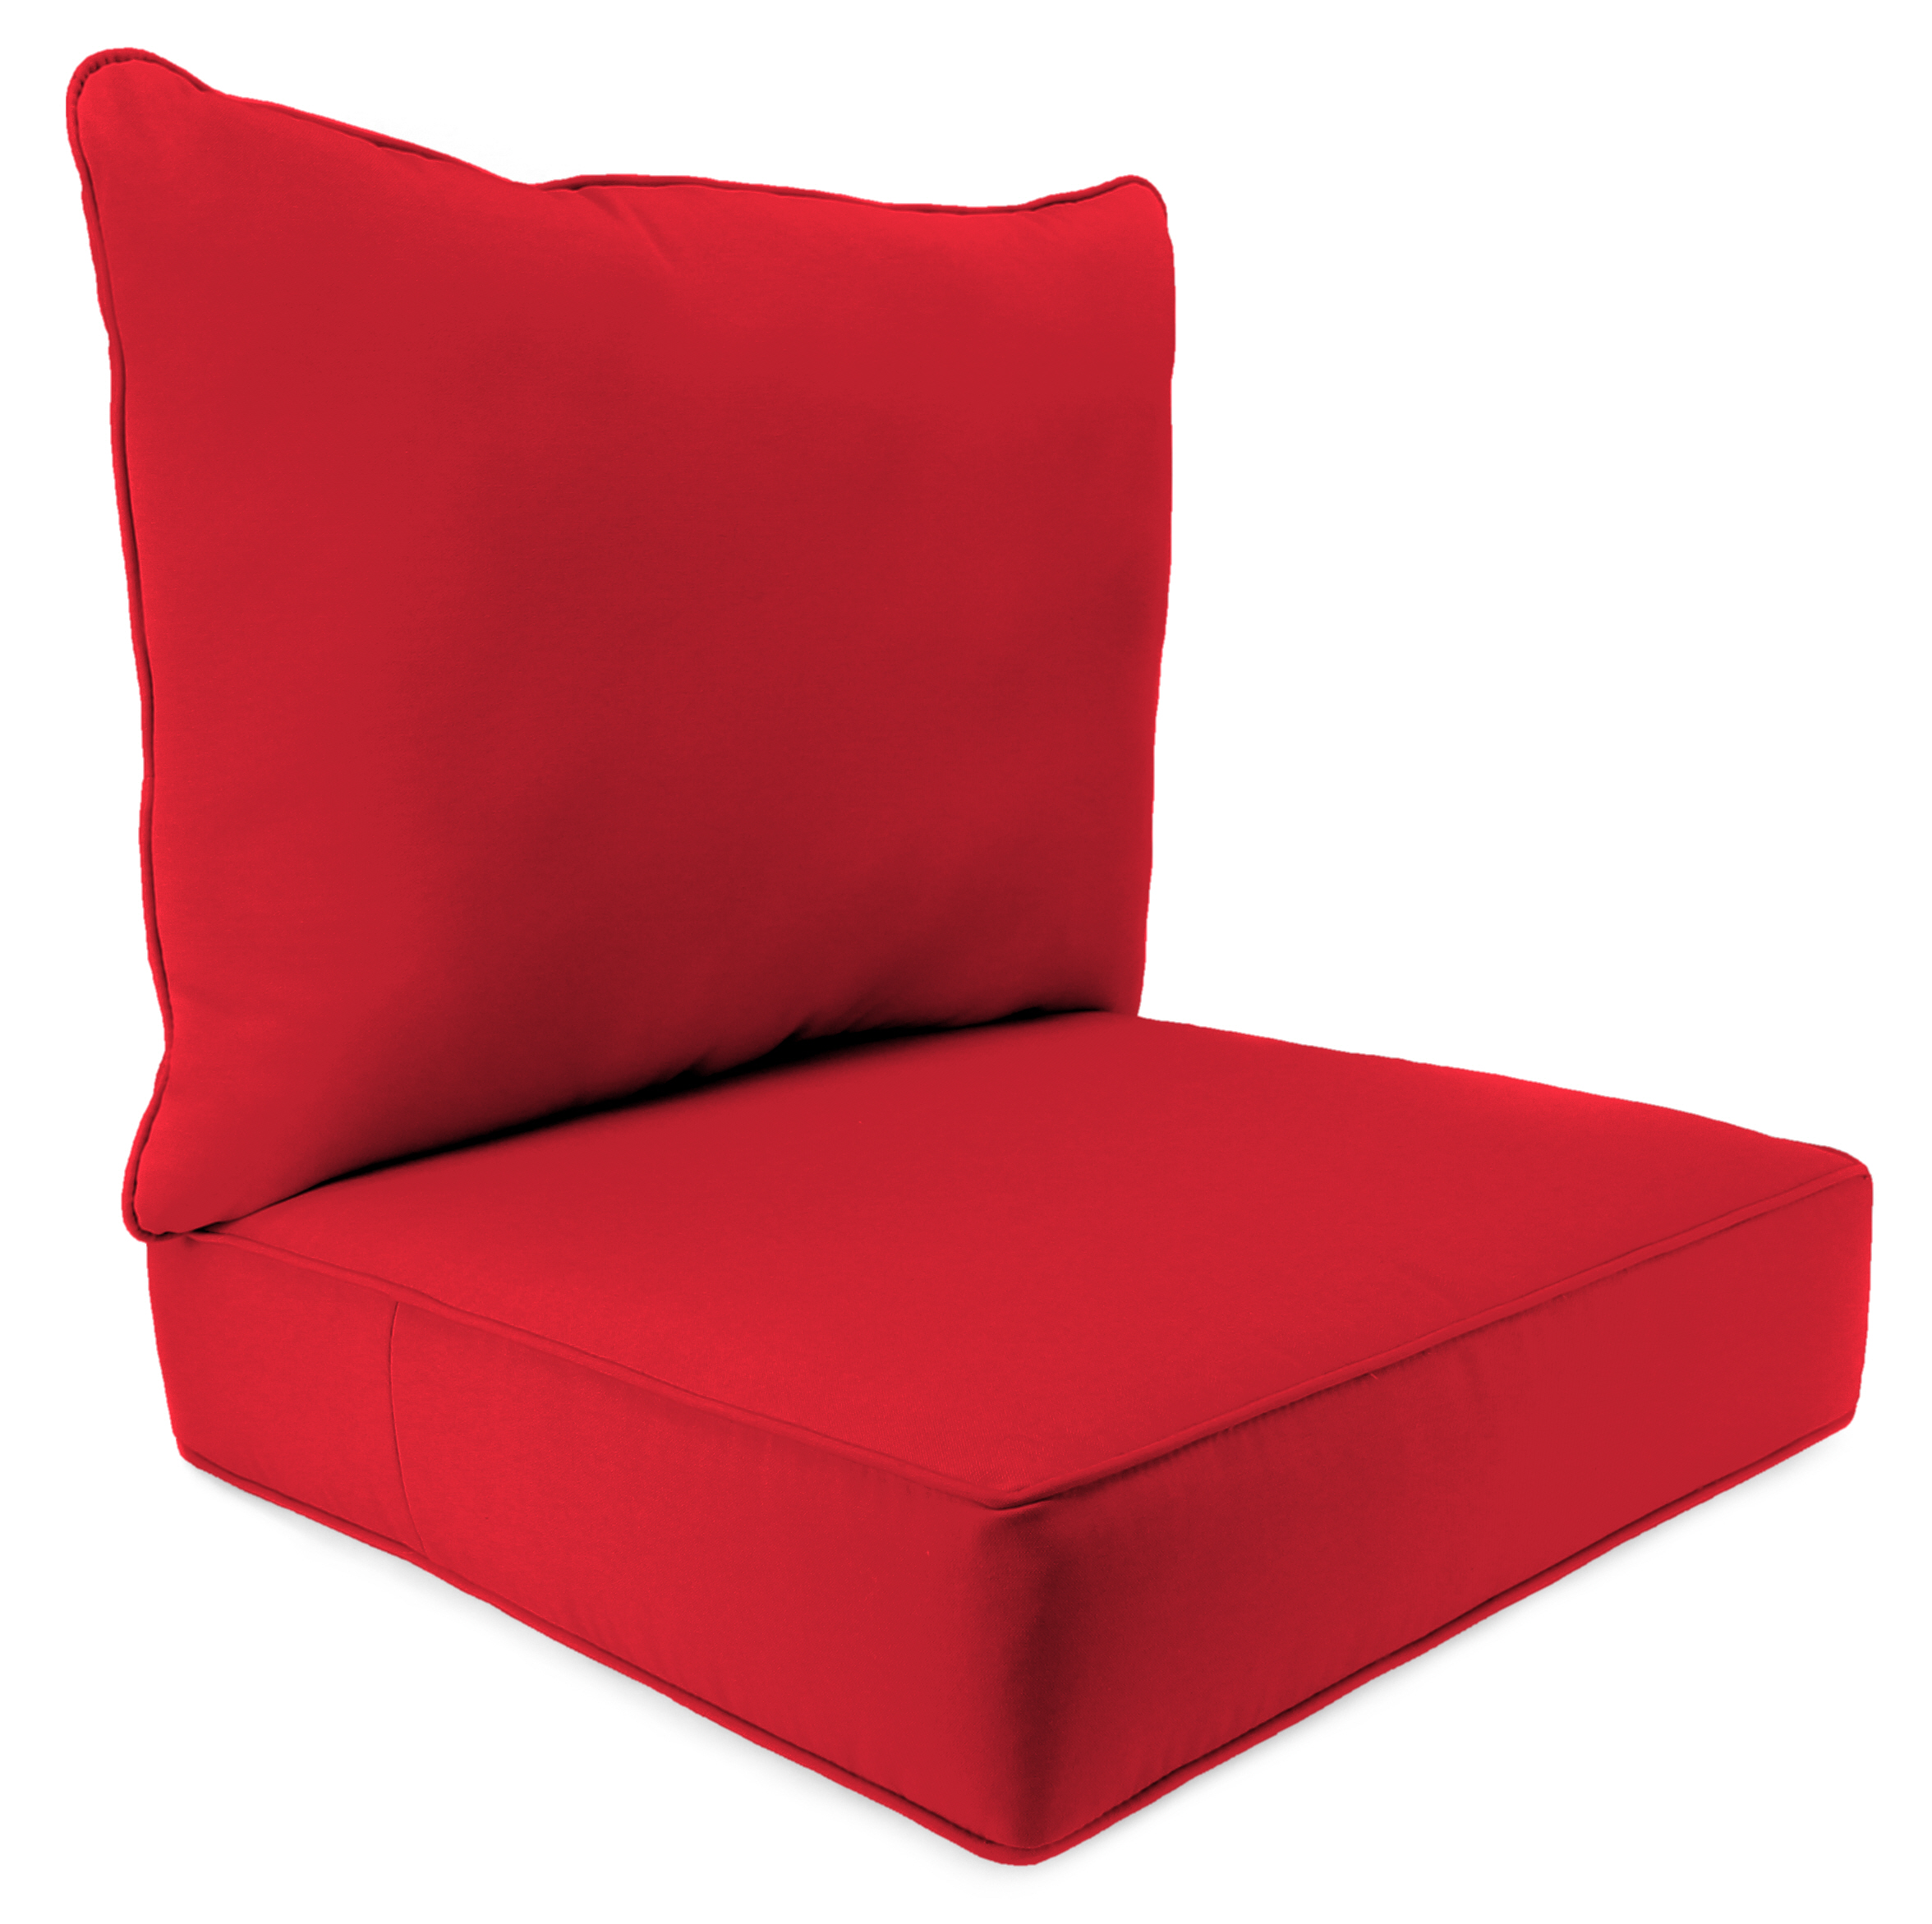 2 Piece Patio Deep Seat Patio Chair Cushion in Canvas Jockey Red